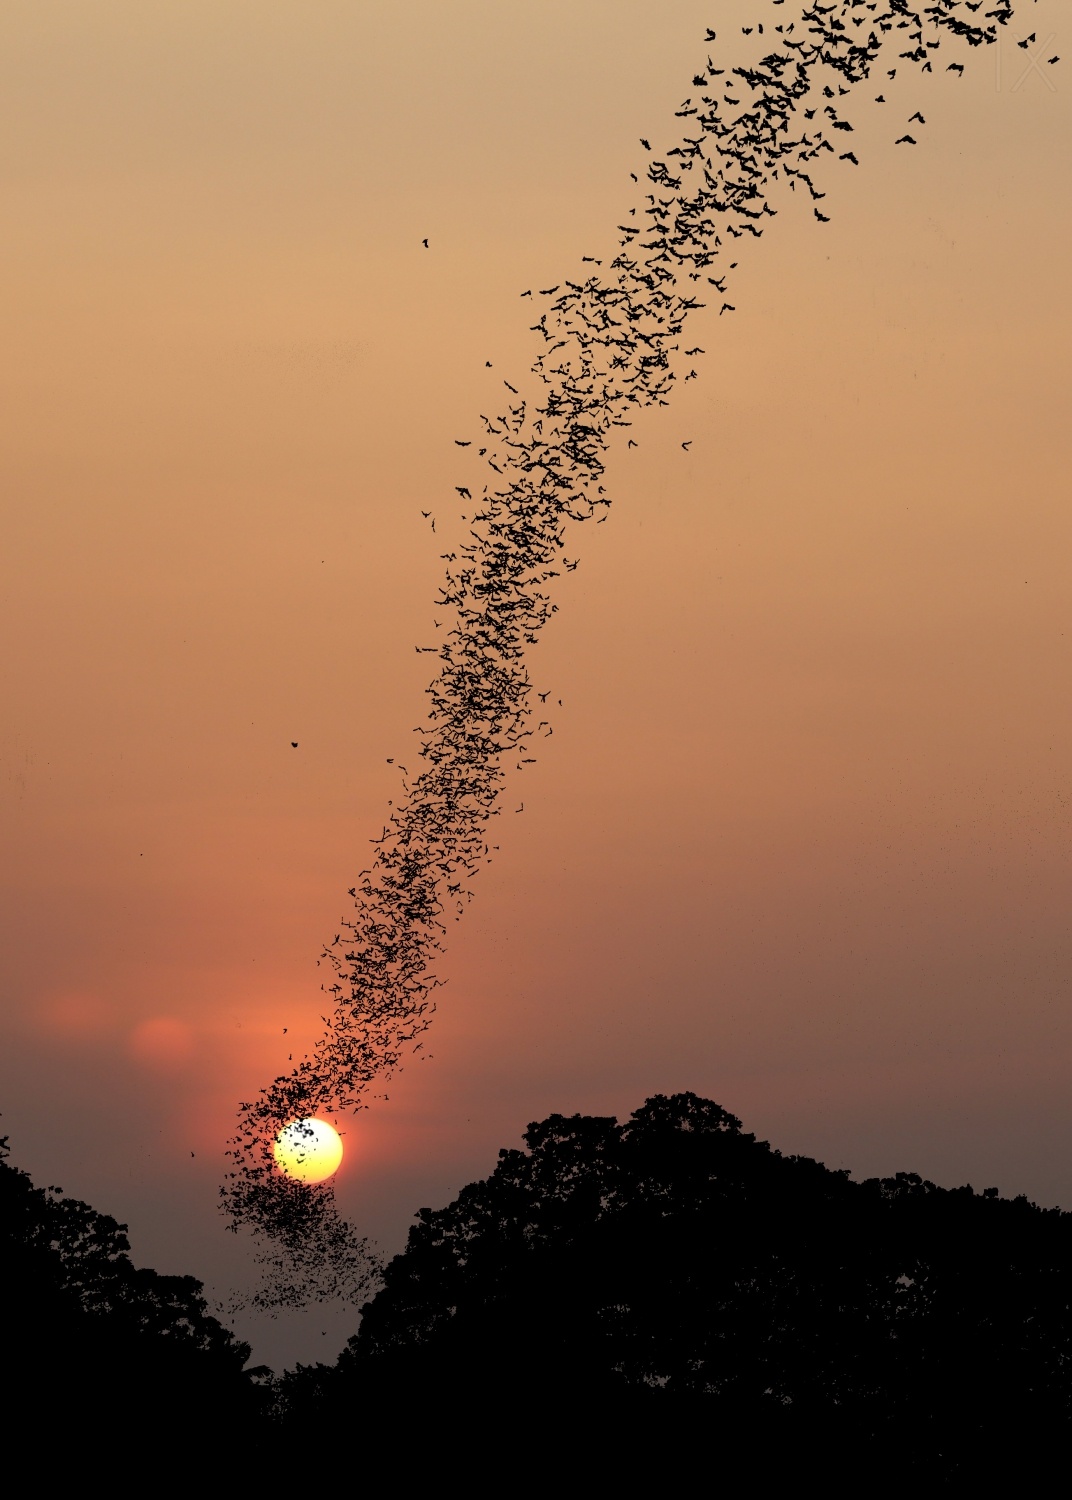 bats swarm at sunset - Bana Pan Arl h , K